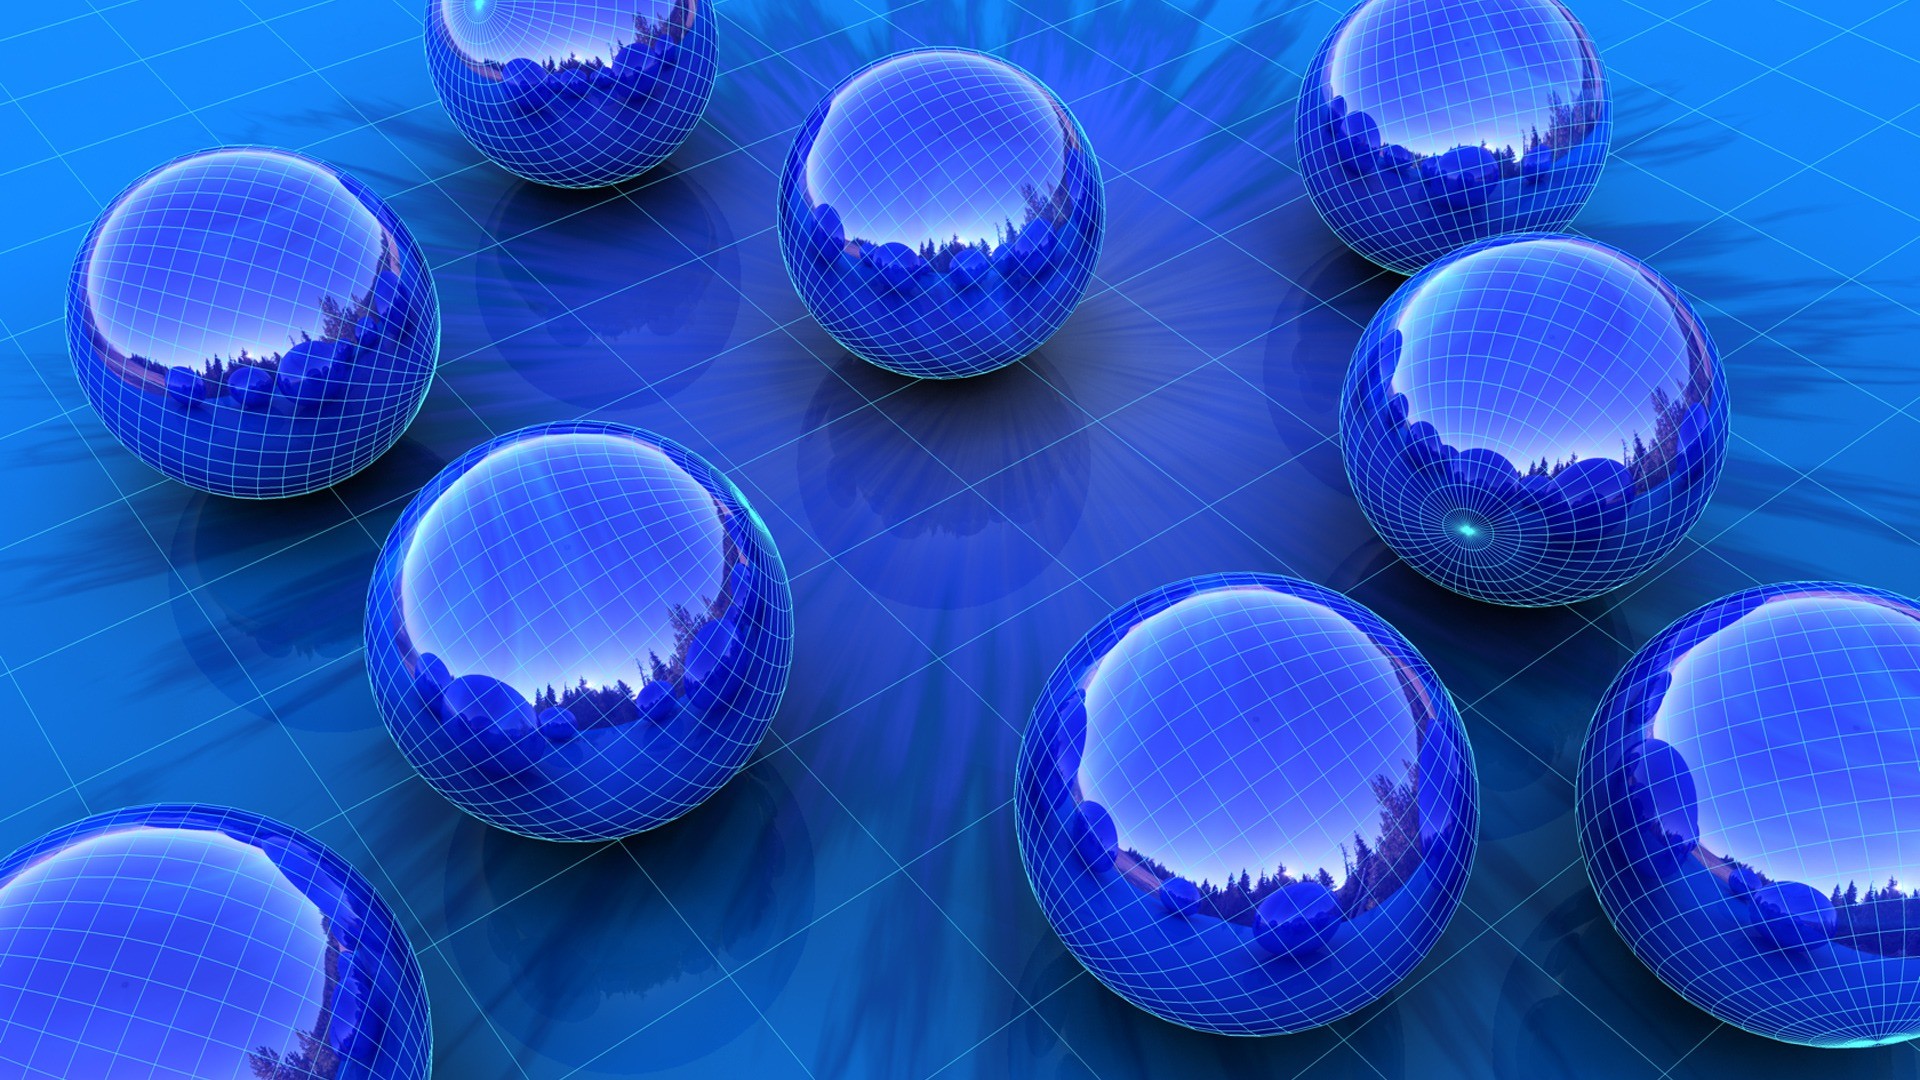 1920x1080 Blue 3D Spheres Desktop Wallpaper 61844